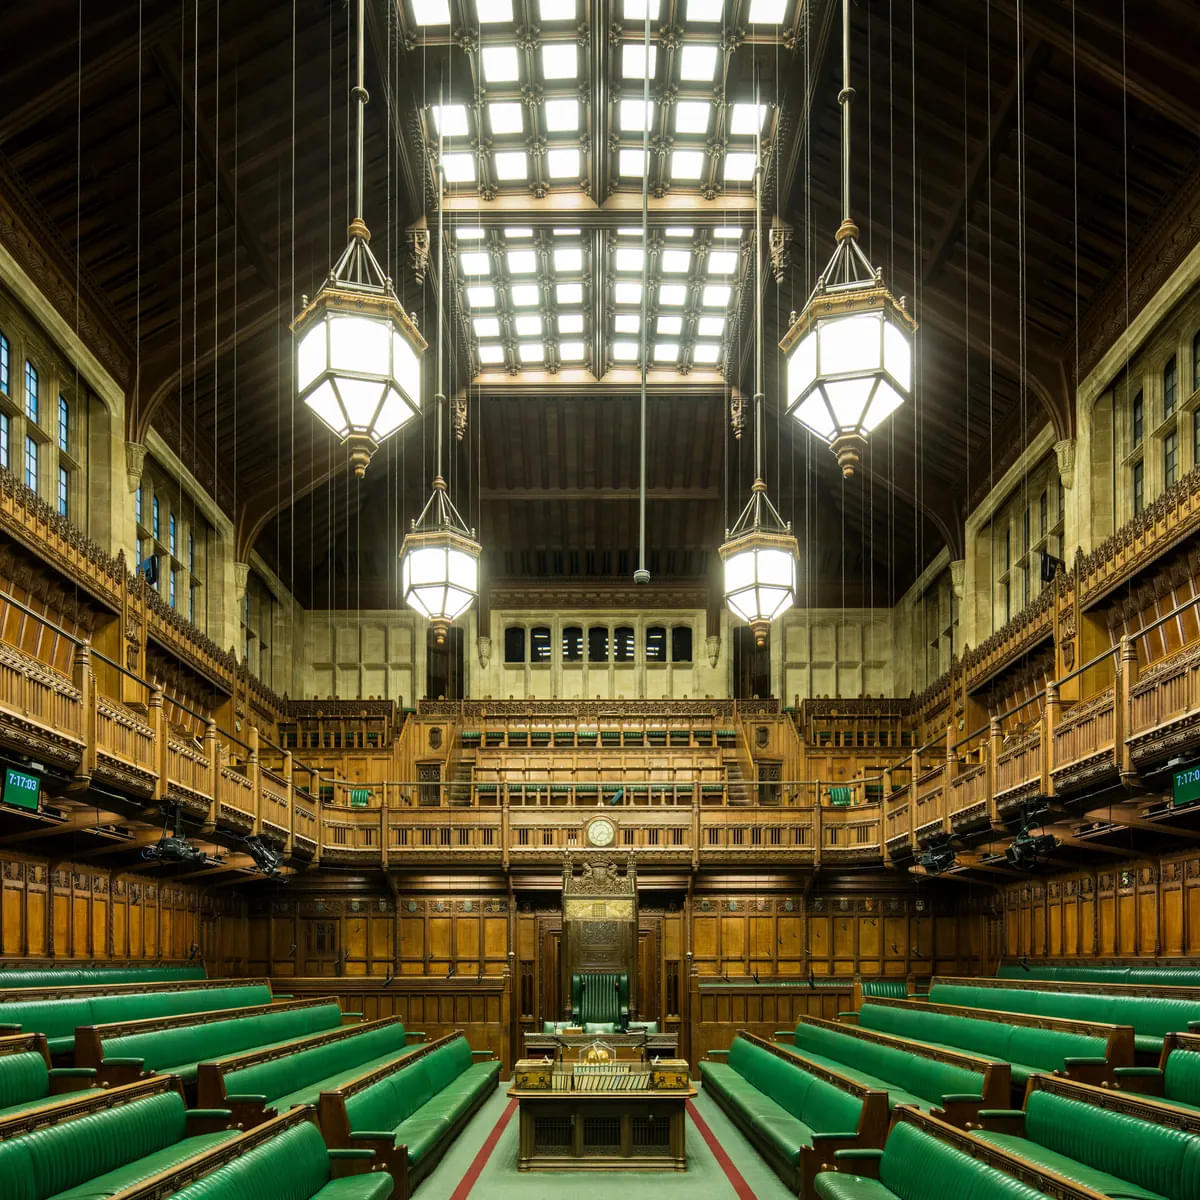 Explore the parliament space